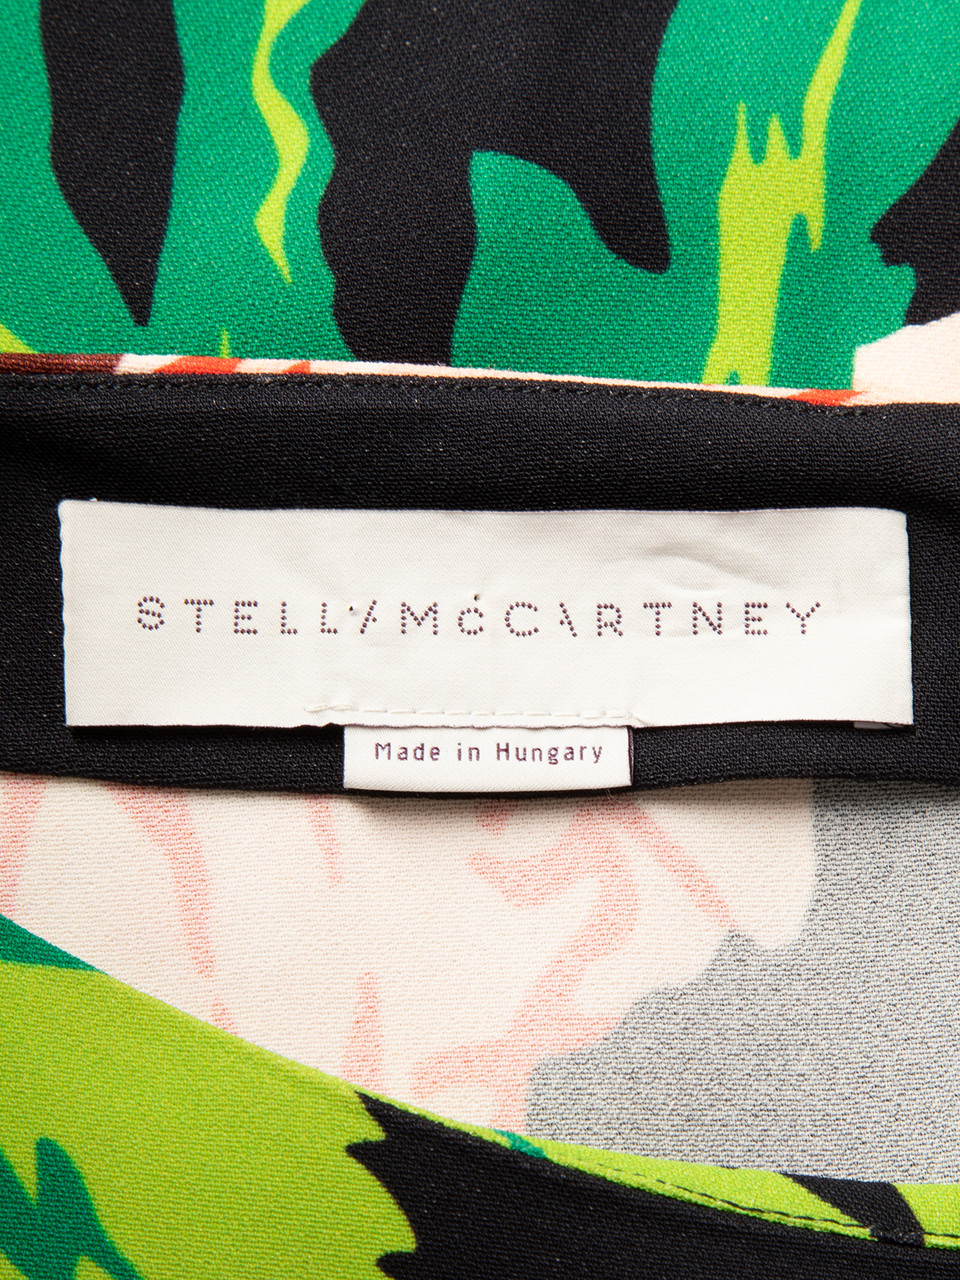 Stella McCartney Floral Print Dress